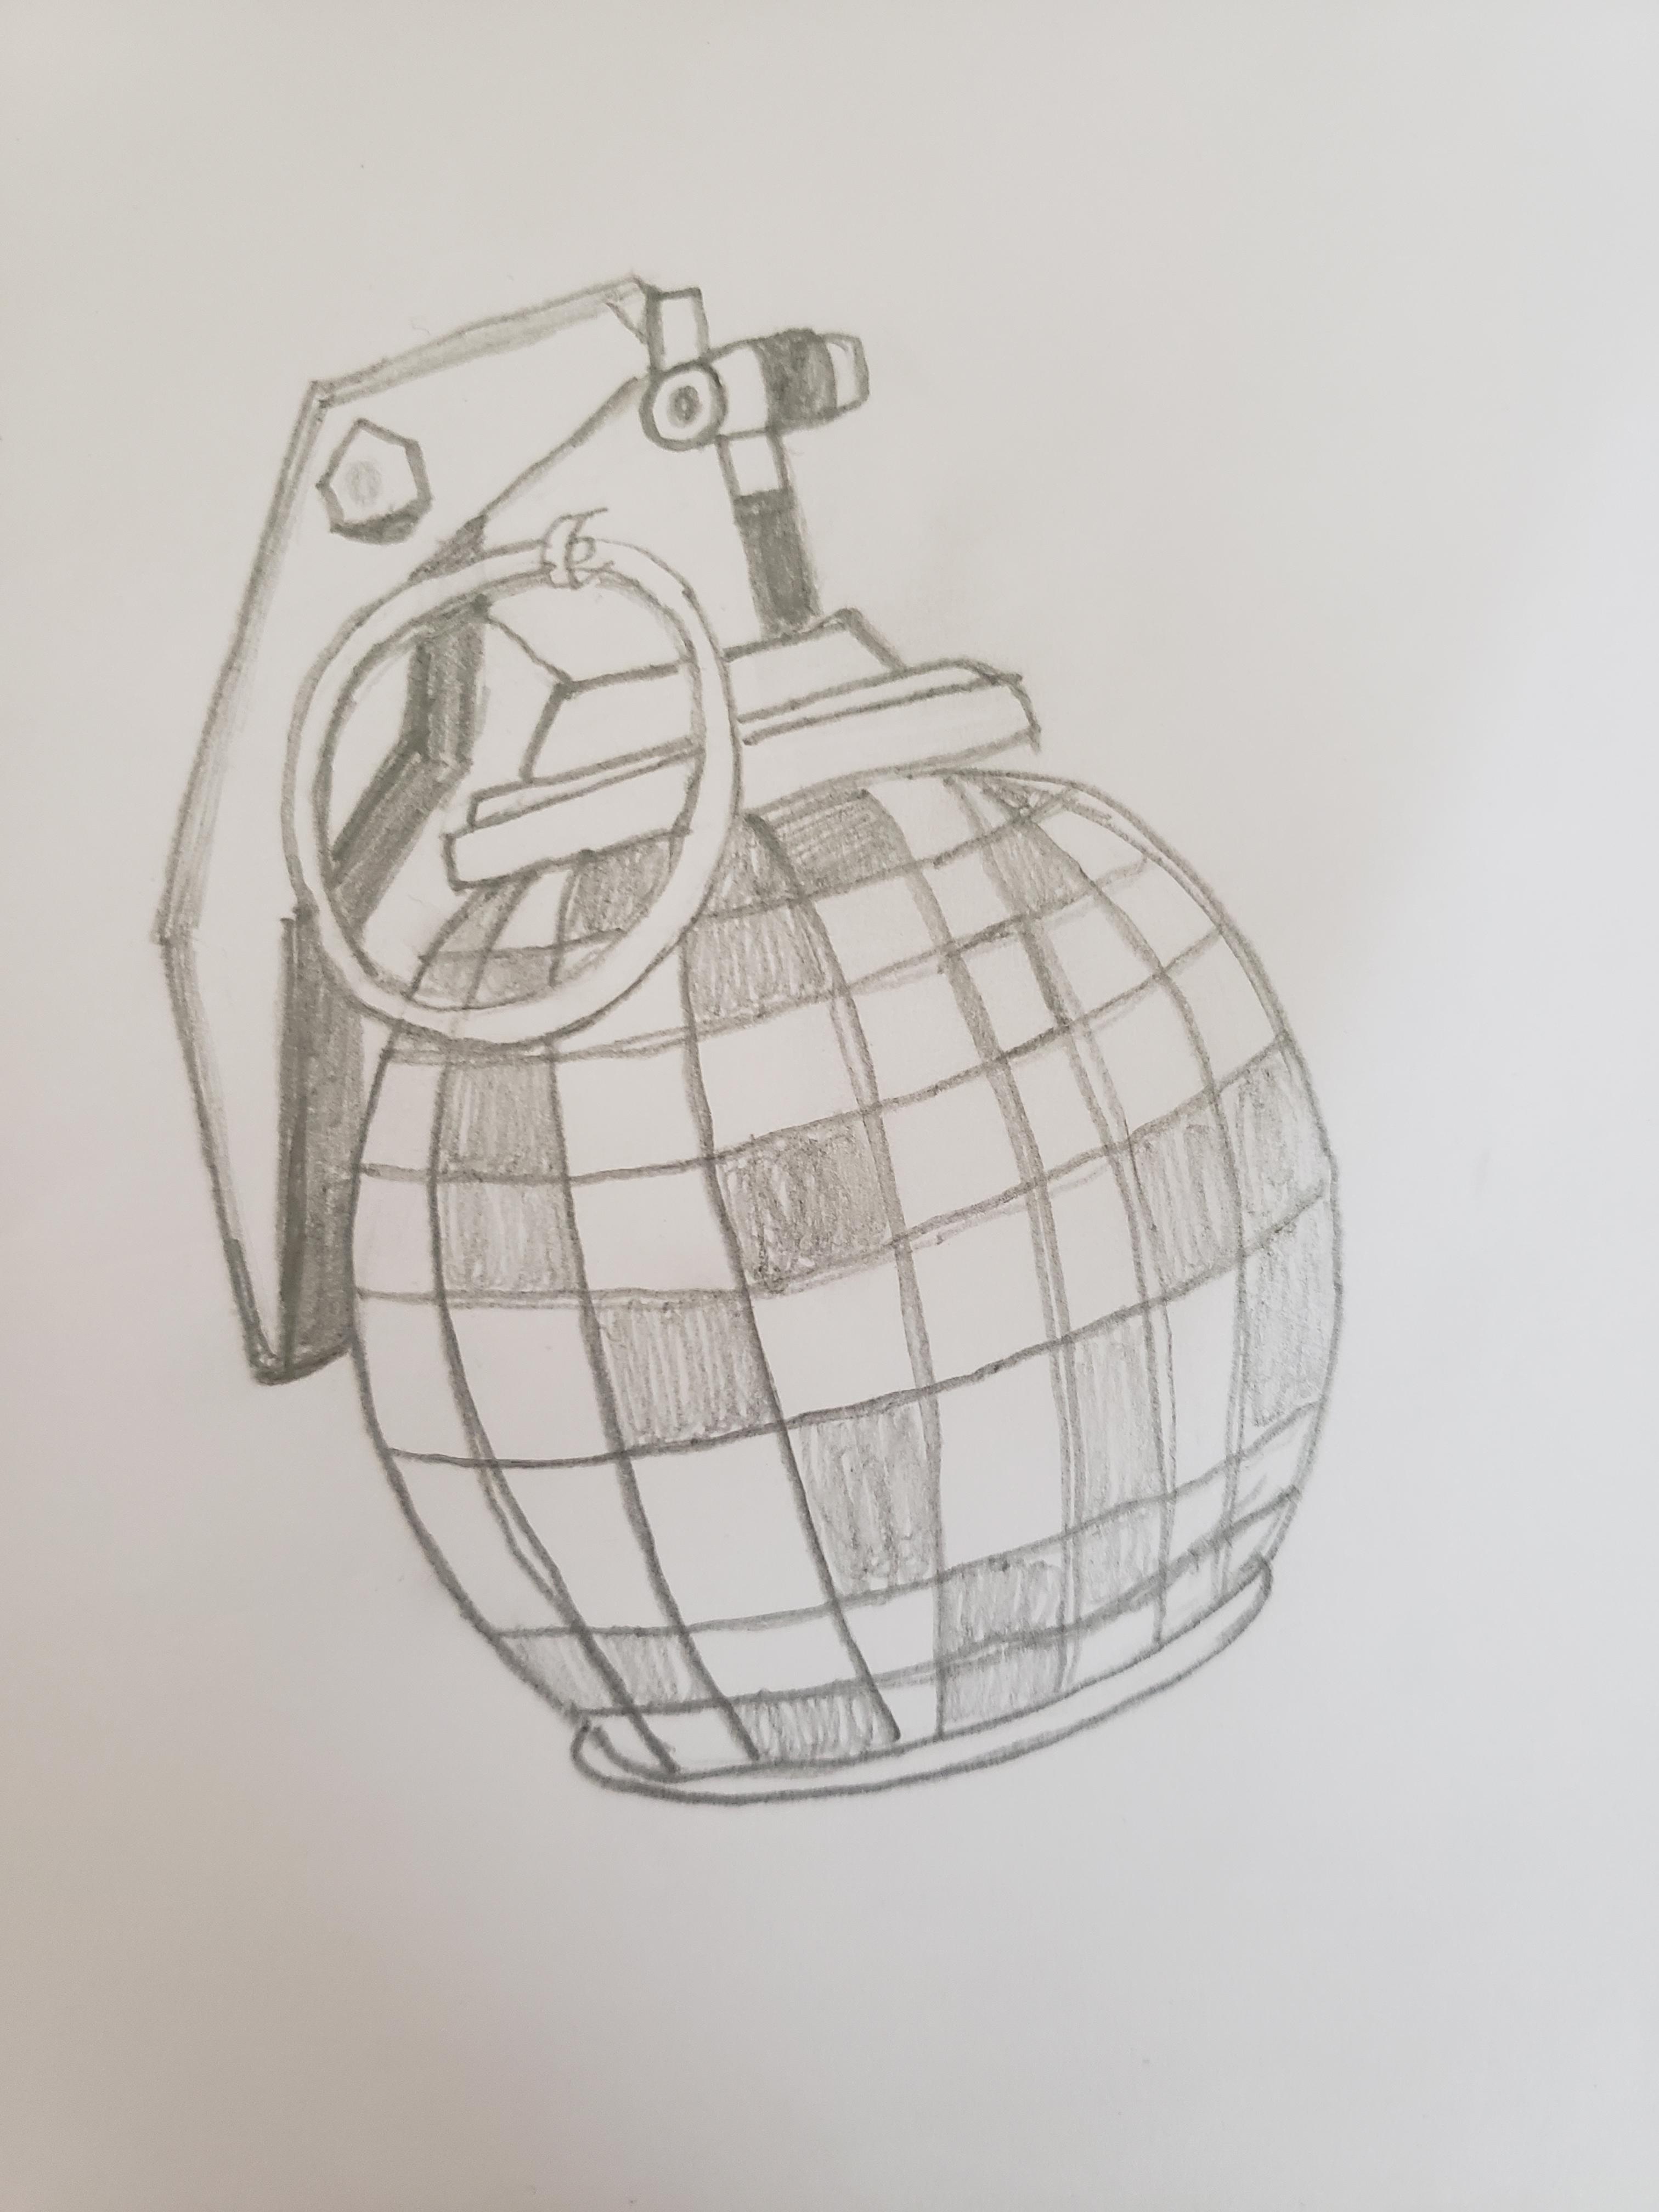 Bomb Drawing Pics